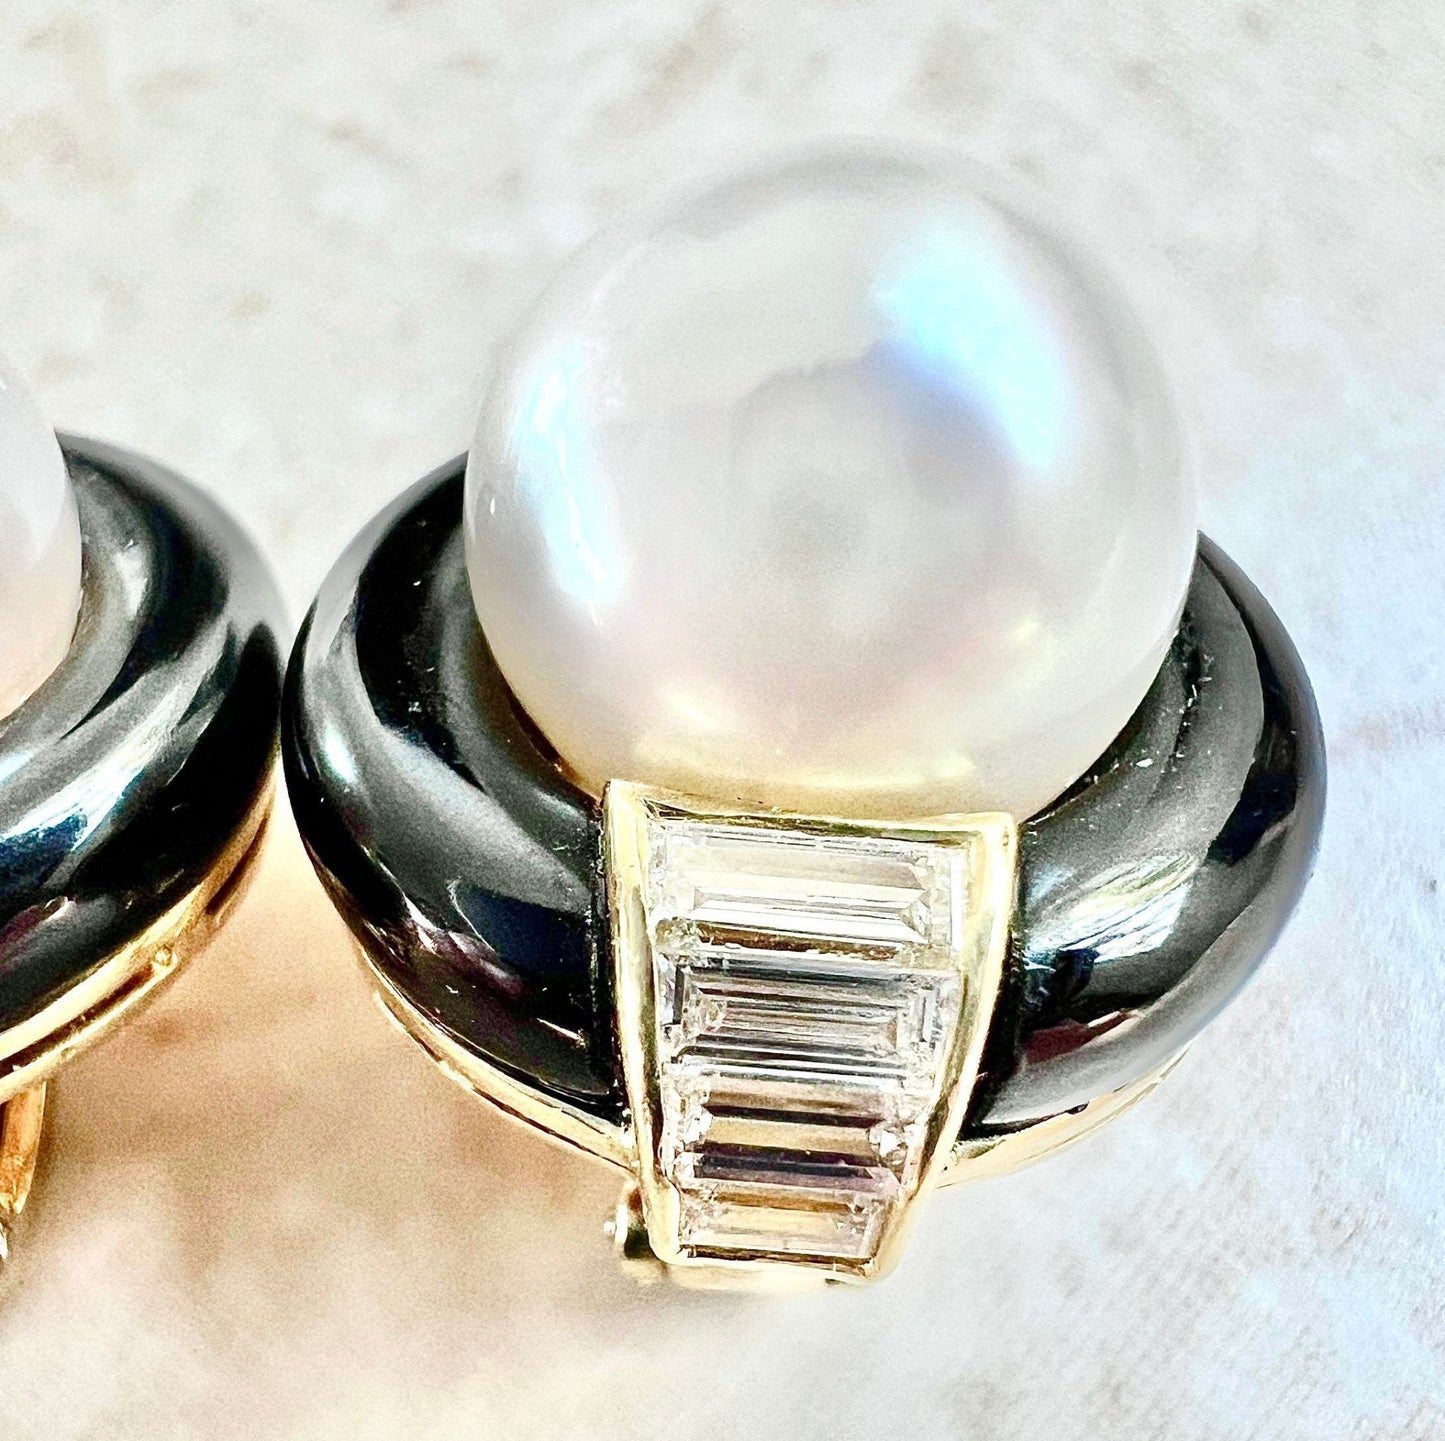 Handcrafted 18K South Sea Pearl, Diamond & Onyx Earrings By Carvin French - Vintage Pearl Earrings - Statement Earrings - Cocktail Earrings